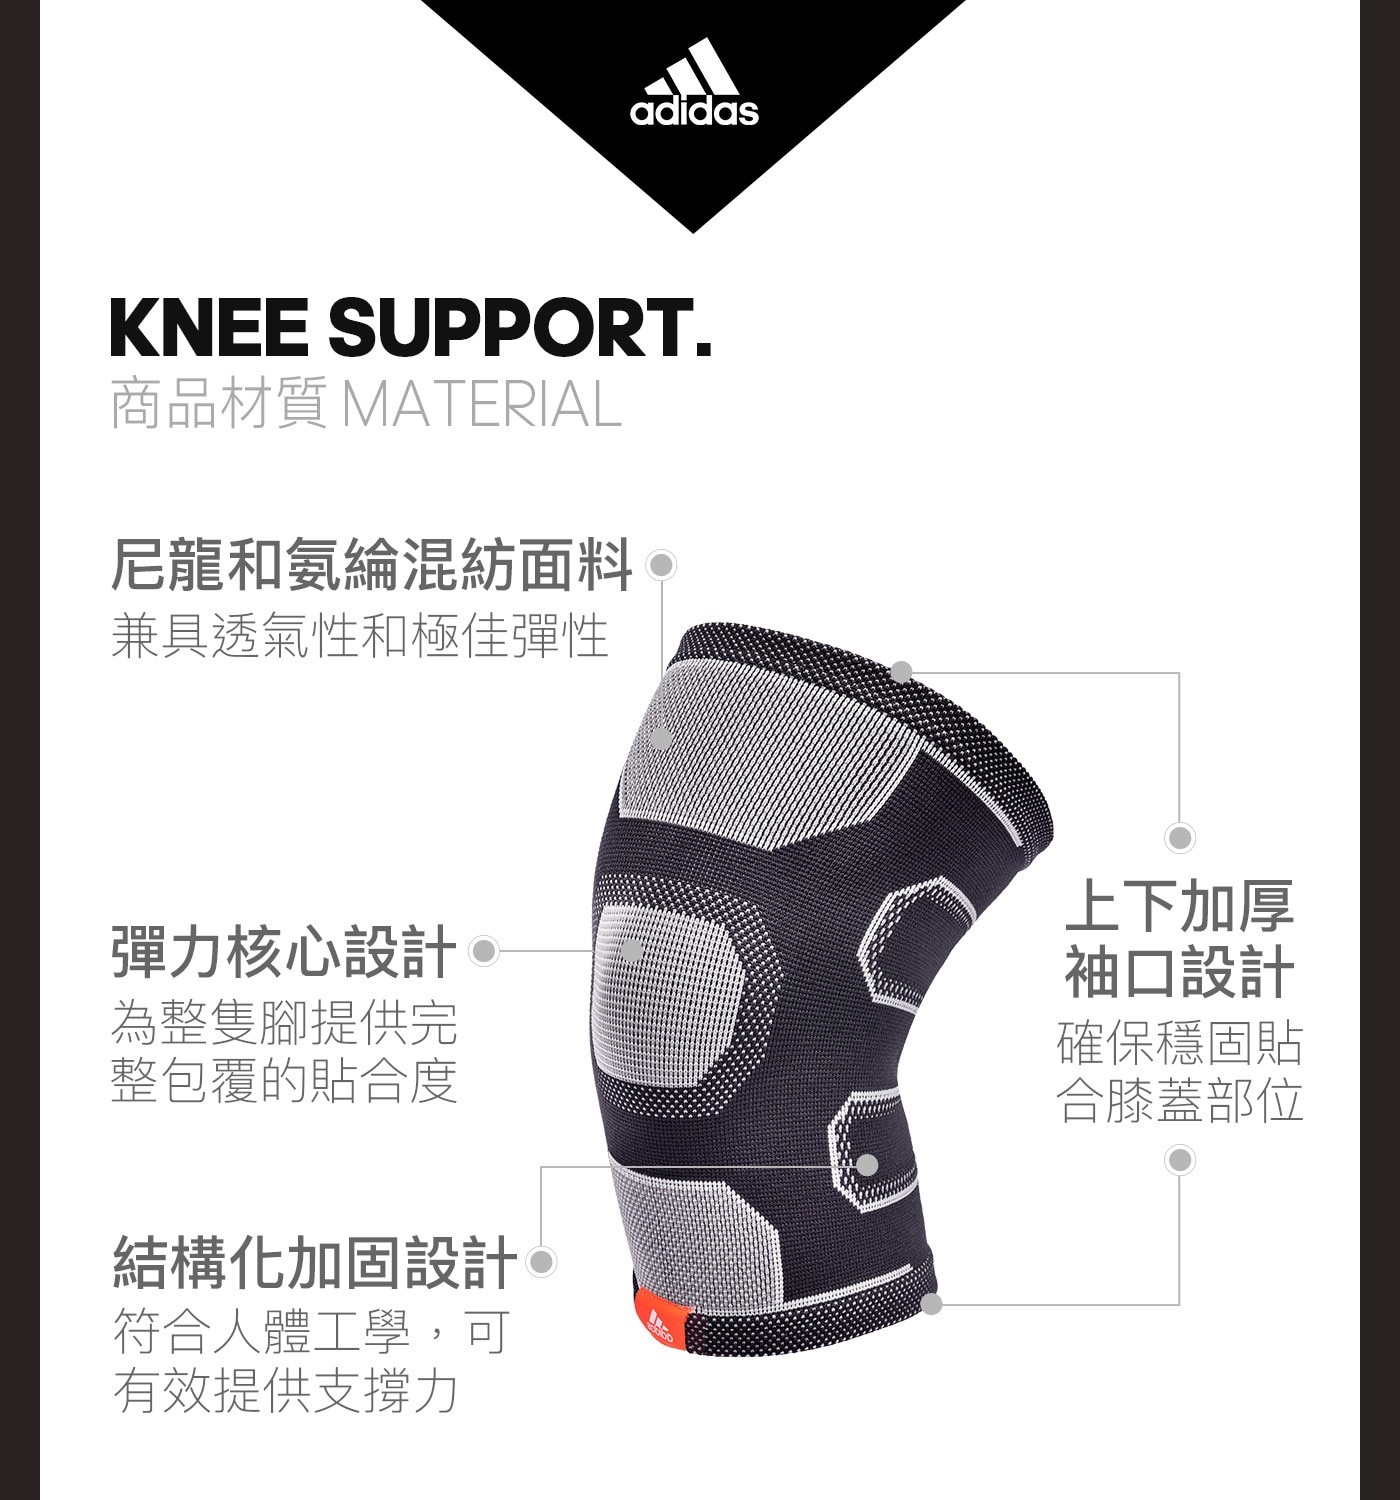 Adidas 踝關節用高性能護套 2入穩定減震頂部和底部均配有厚袖口設計可在訓練過程中保持穩定與支撐力有效緩解衝擊減低震動保護踝關節